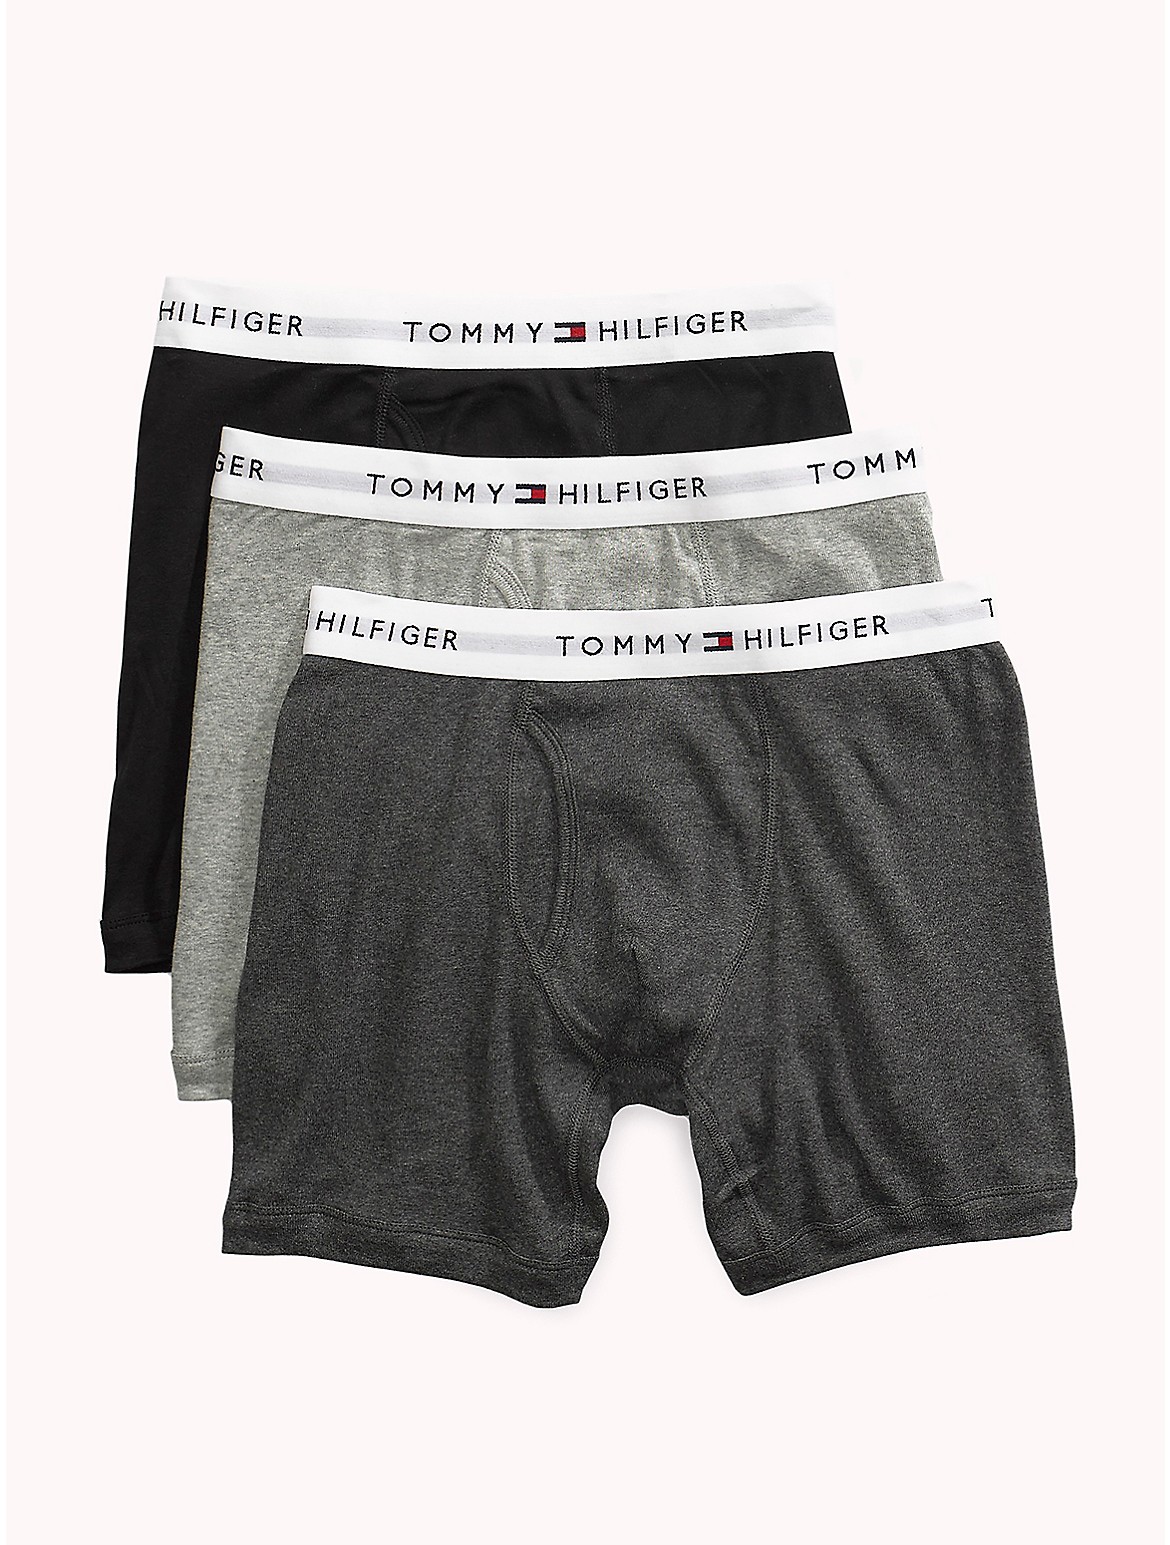 Tommy Hilfiger Men's Cotton Classics Boxer Brief 3-Pack - Grey - S